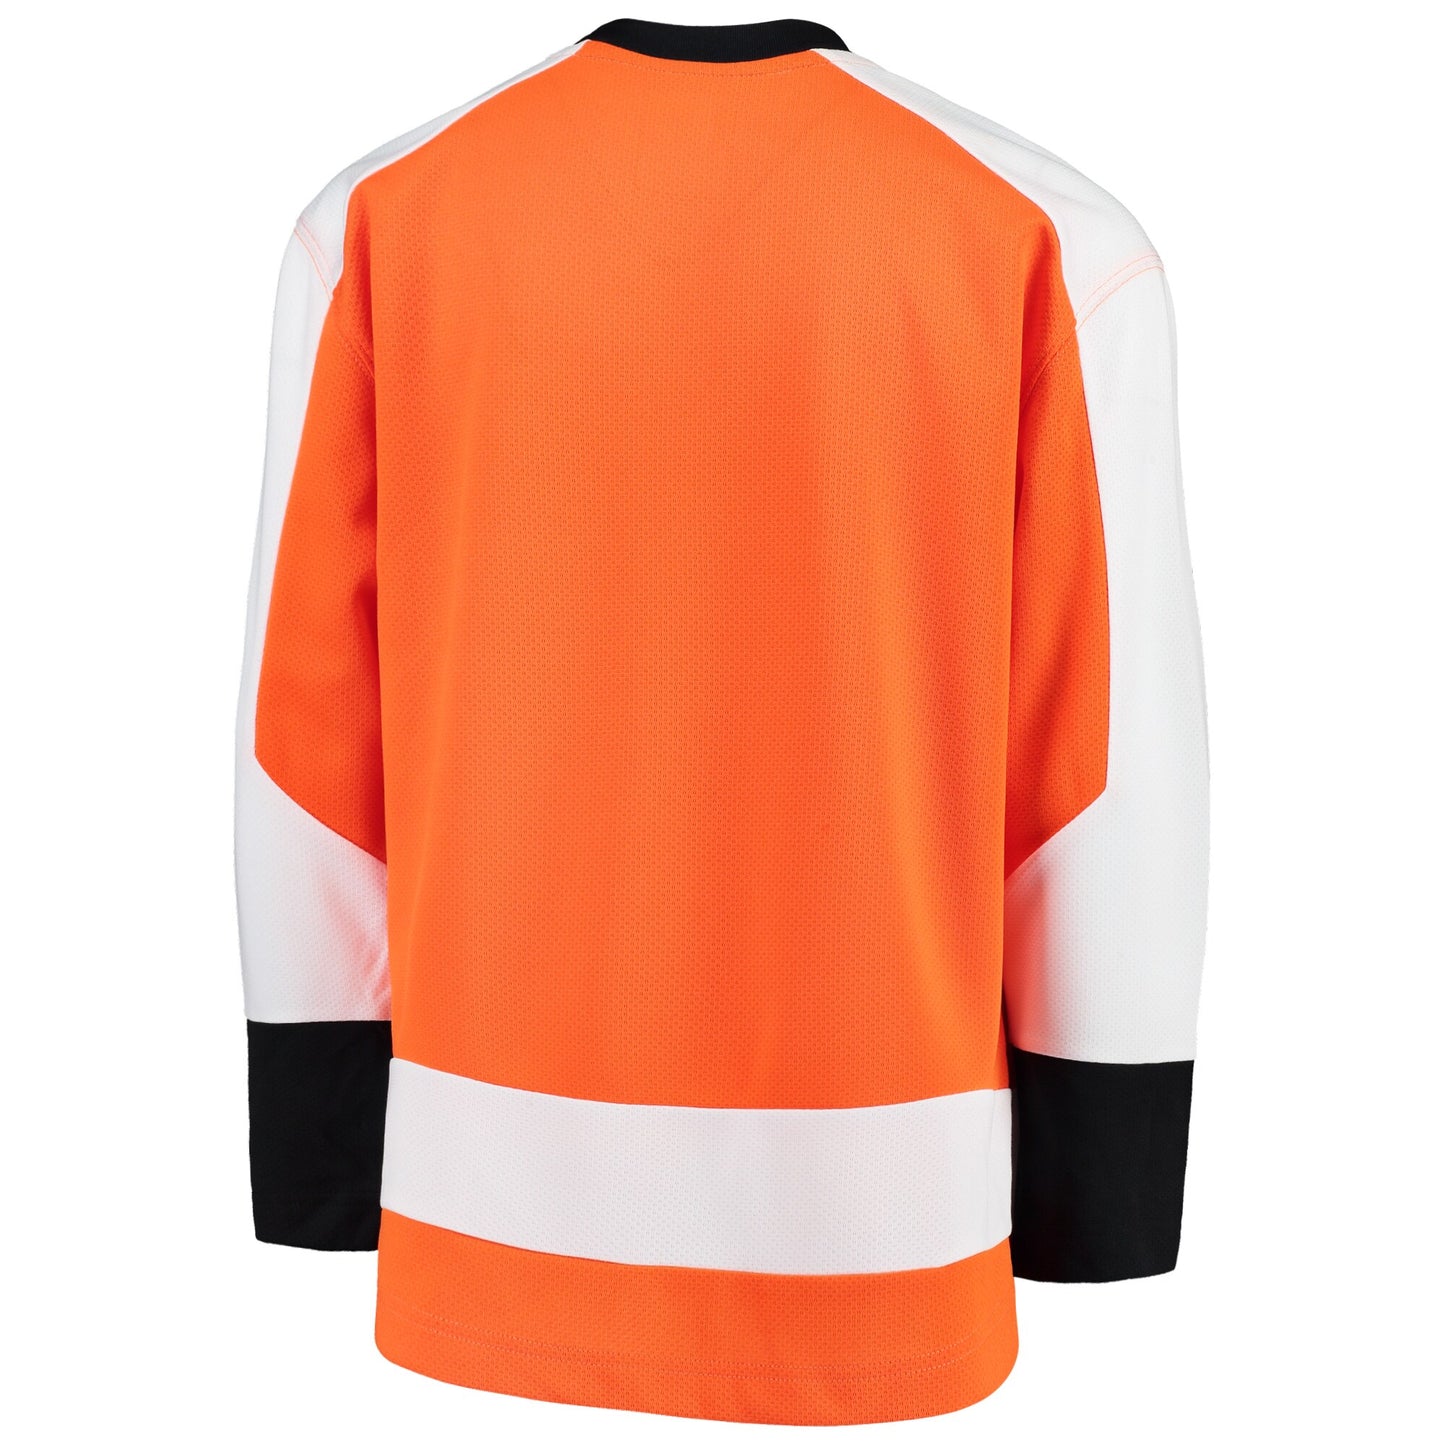 Philadelphia Flyers Fanatics Branded Youth Home Replica Blank Jersey - Orange